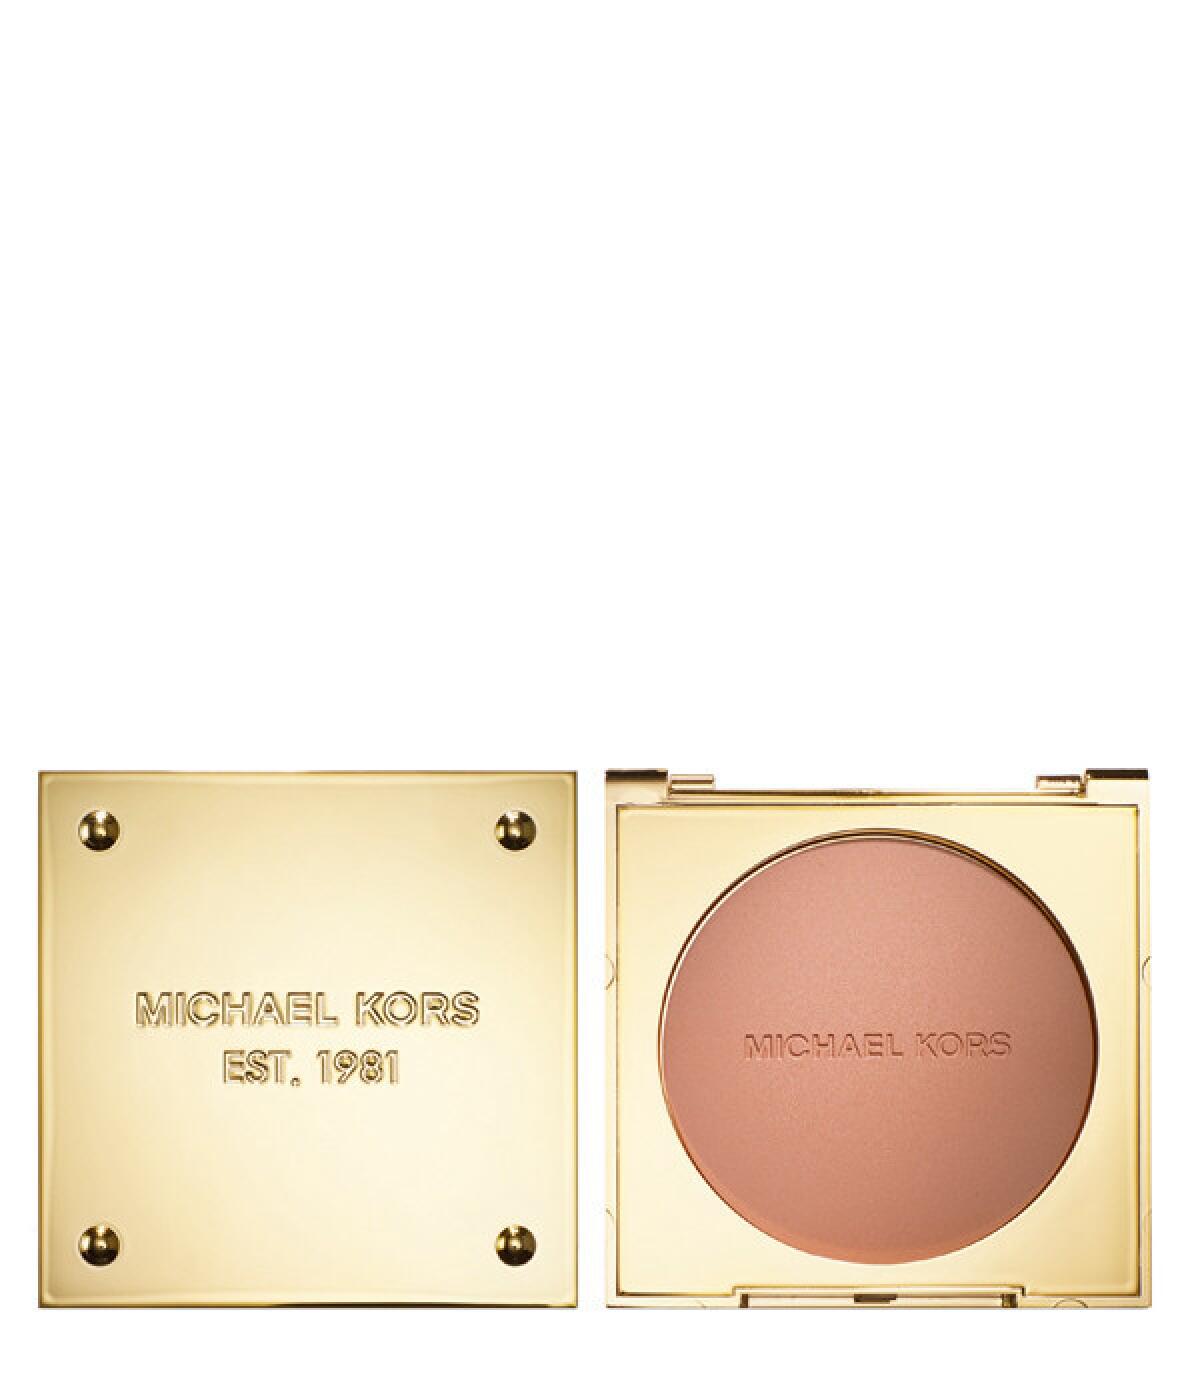 Michael Kors bronzing powder in Flush, $50 at Michael Kors boutiques and macys.com.